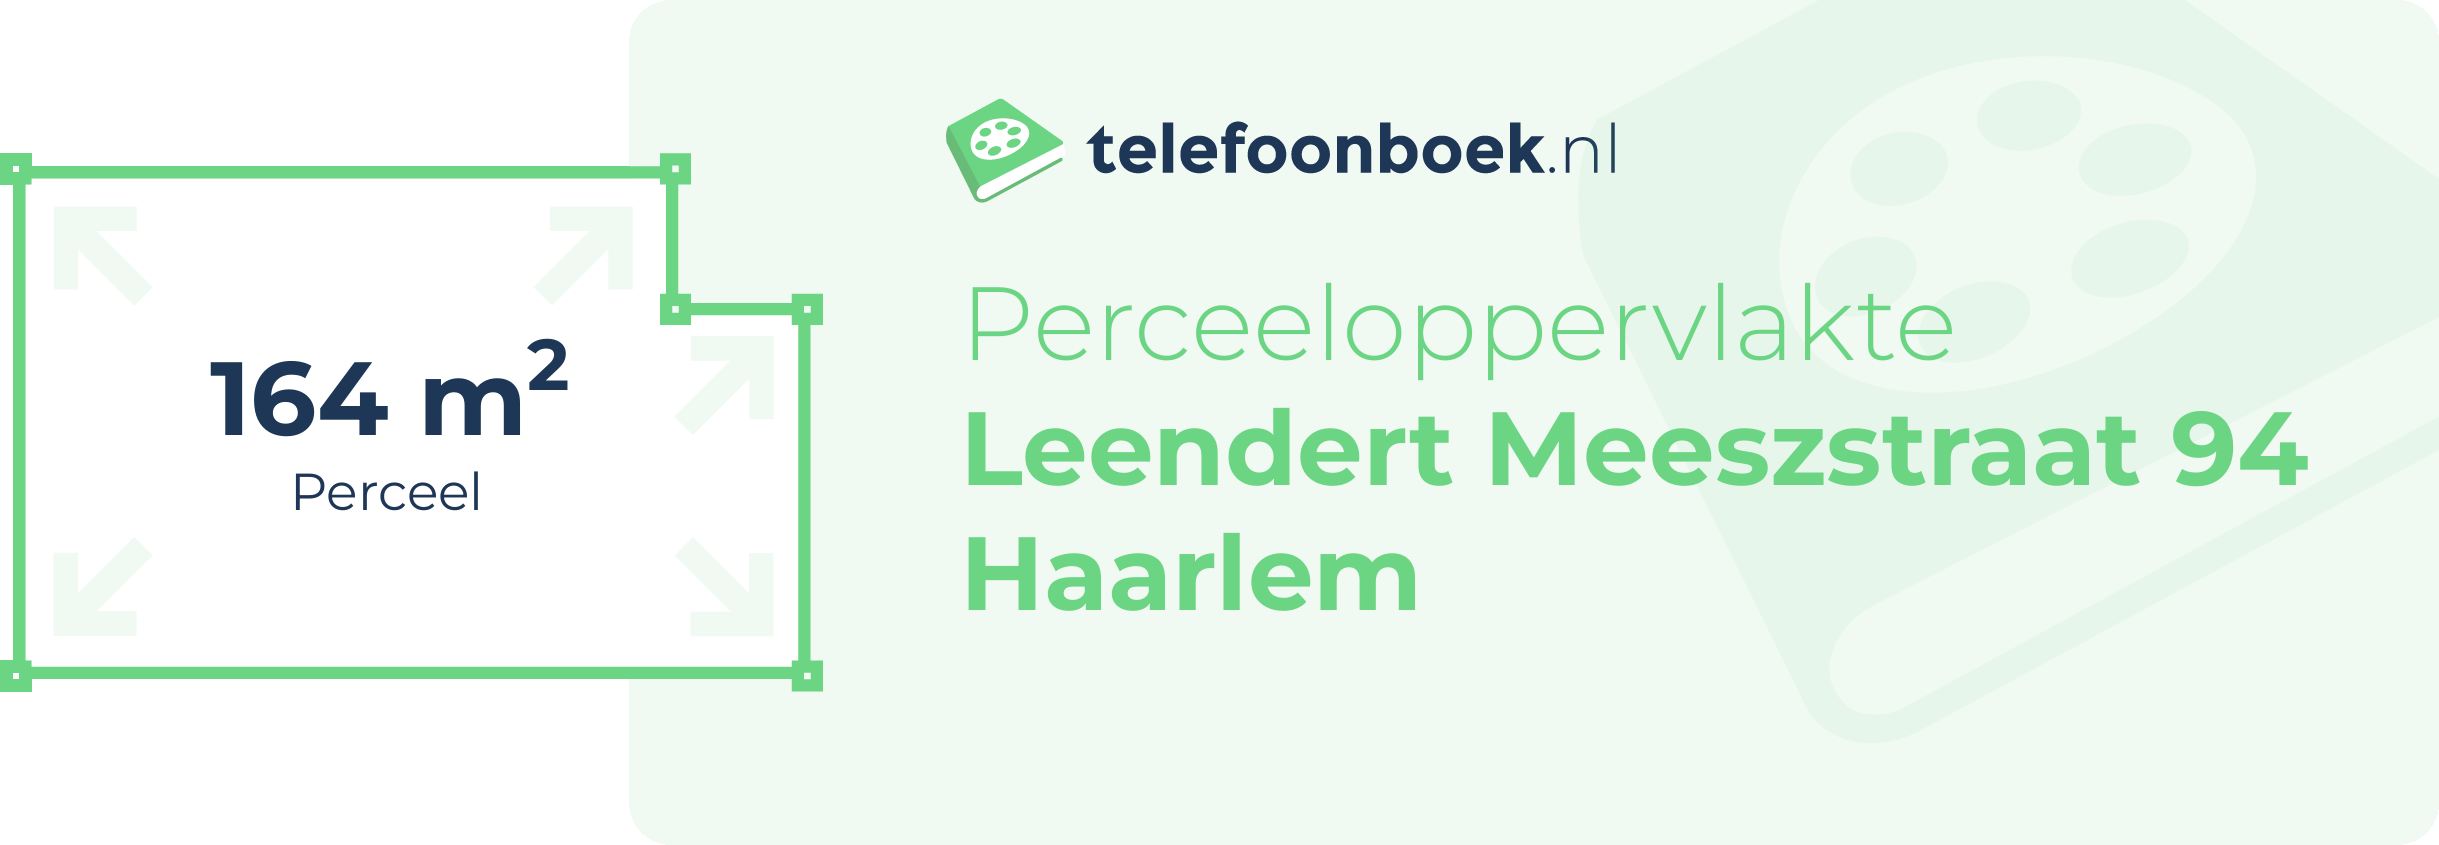 Perceeloppervlakte Leendert Meeszstraat 94 Haarlem